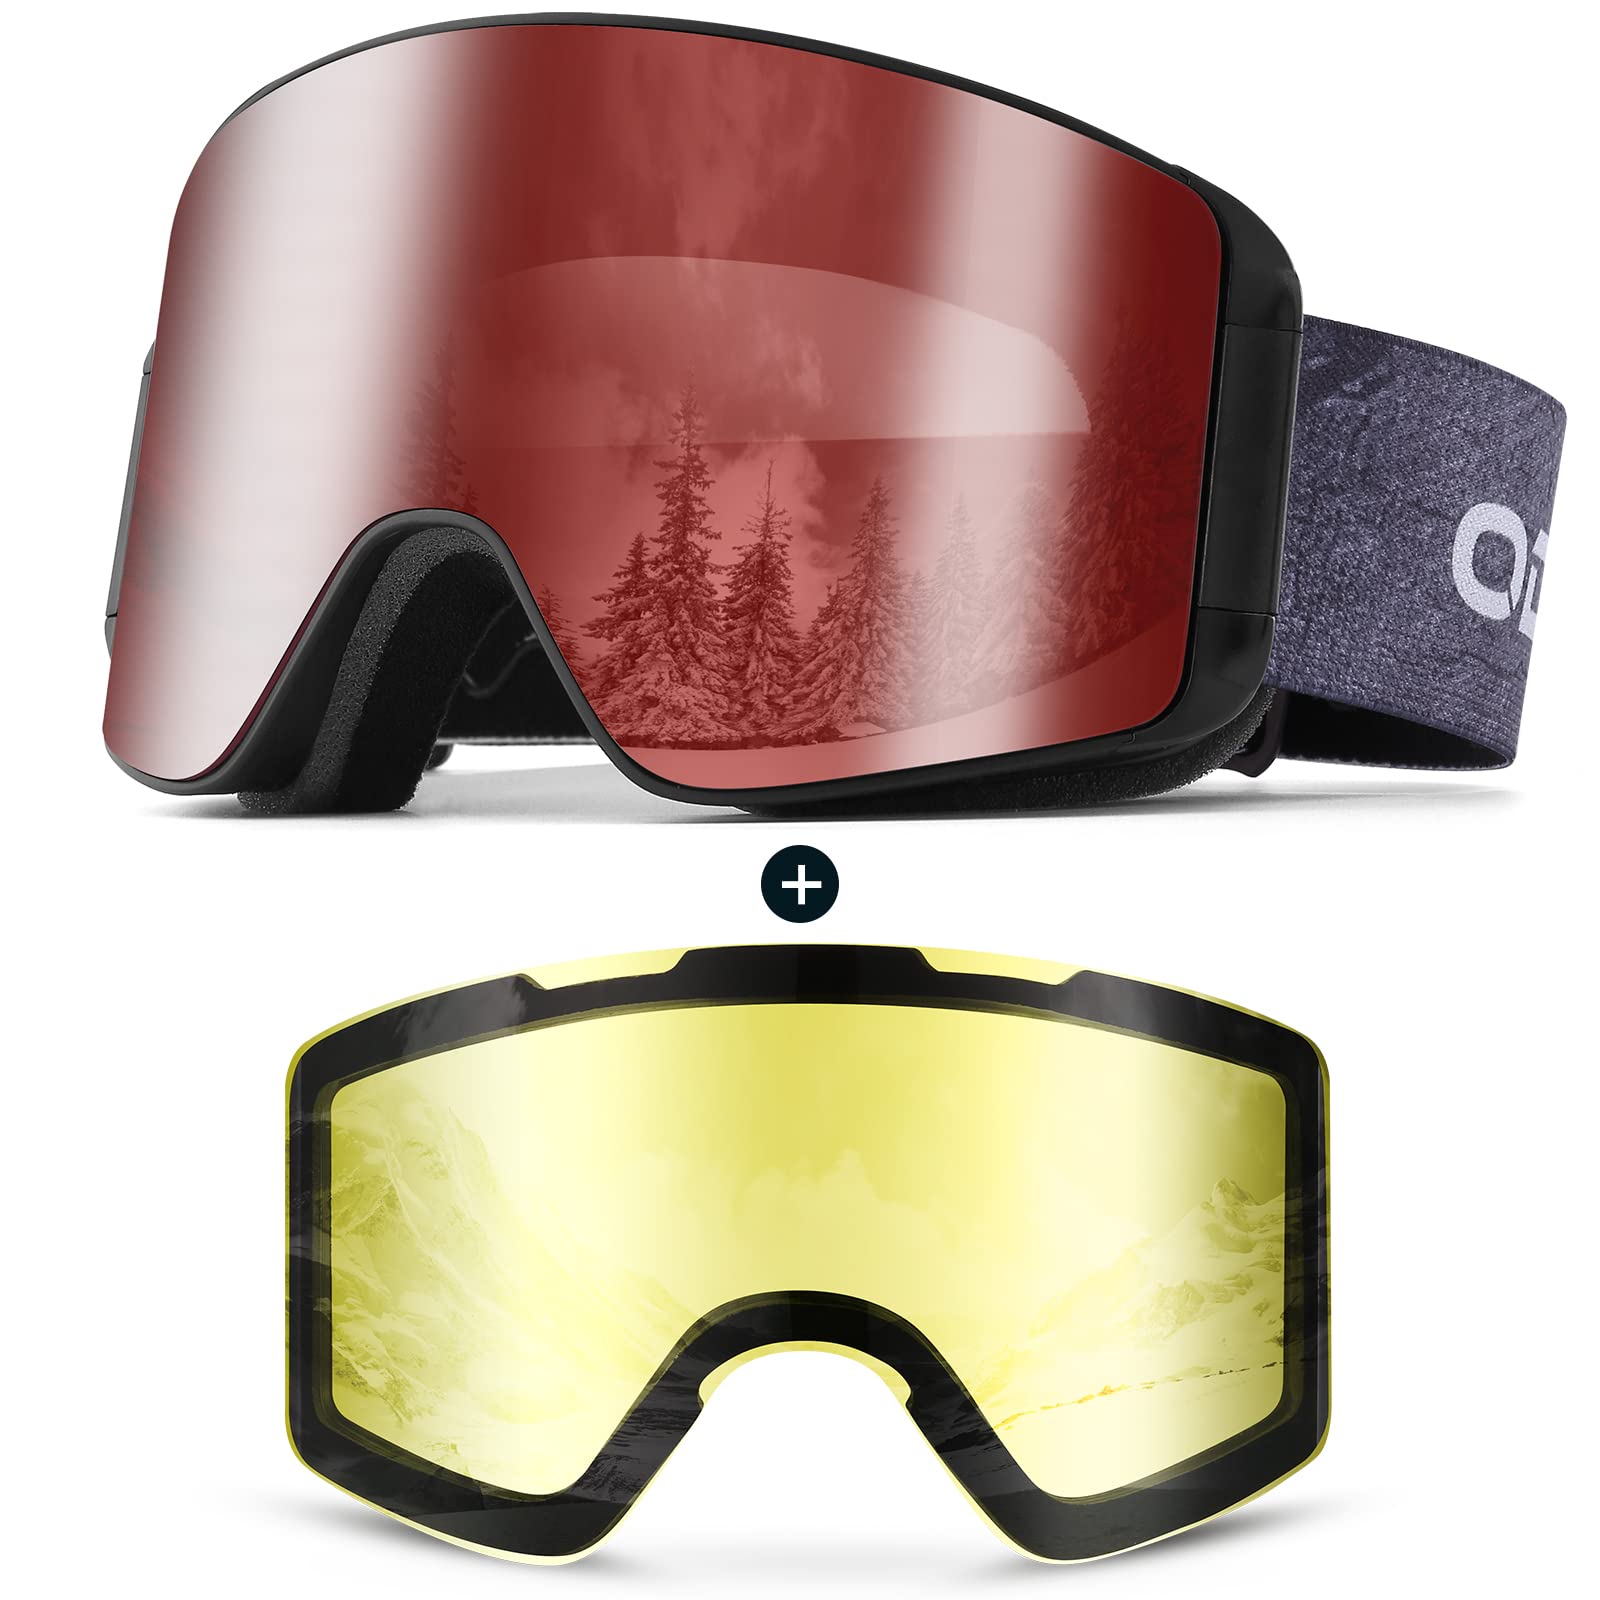 Odoland Ski Goggles with Detachable Lens, Frameless